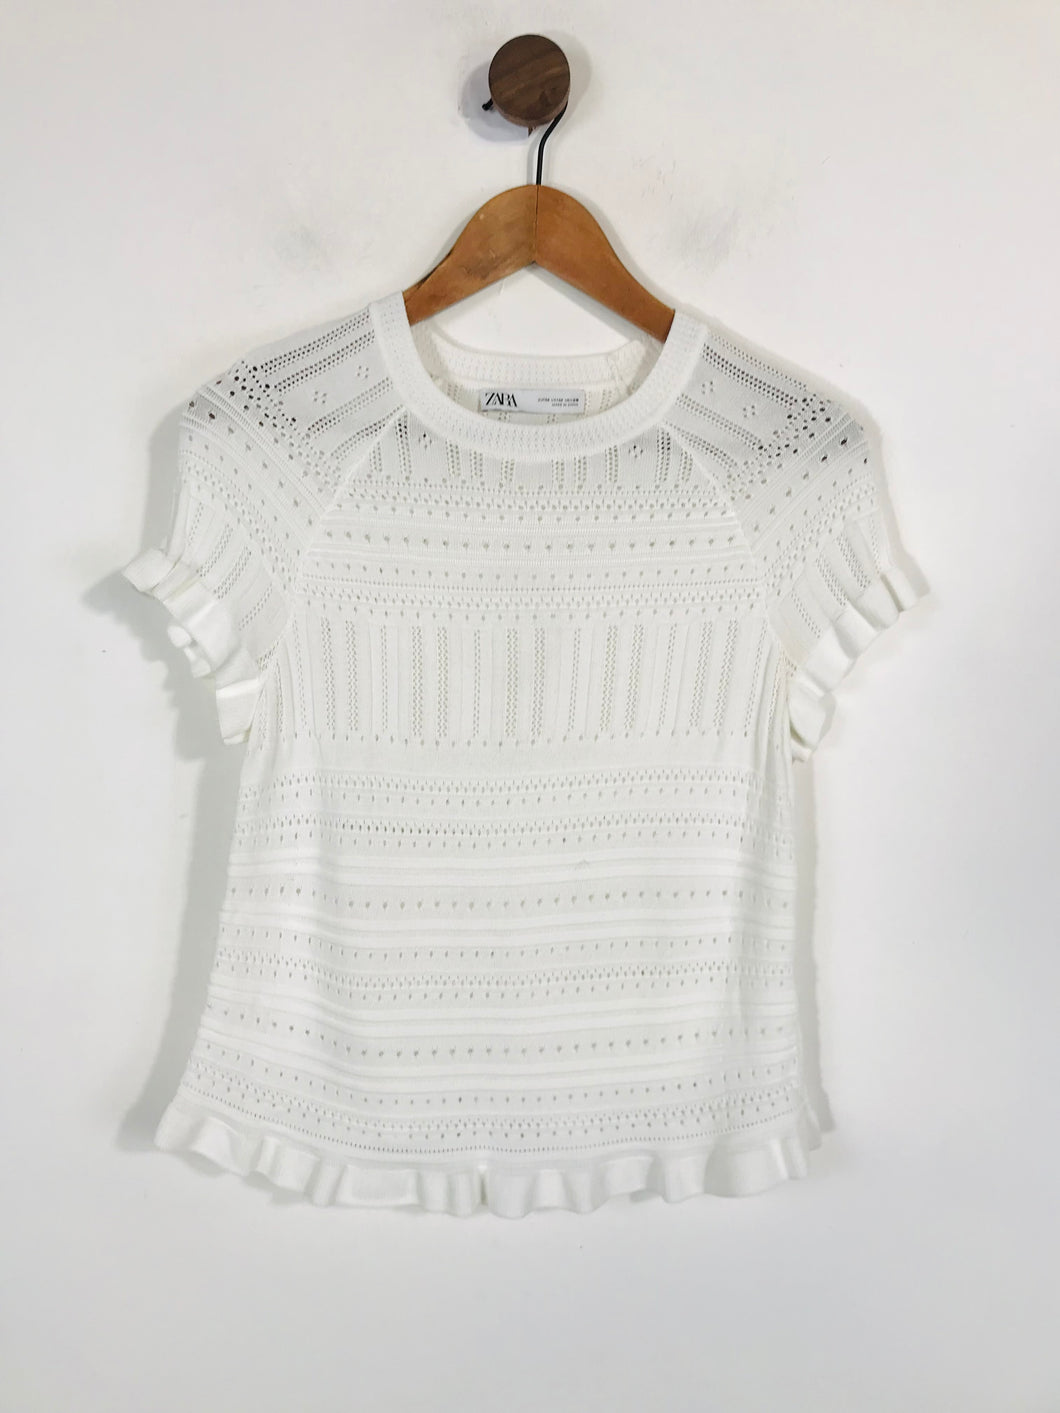 Zara Women's Lace T-Shirt | M UK10-12 | White